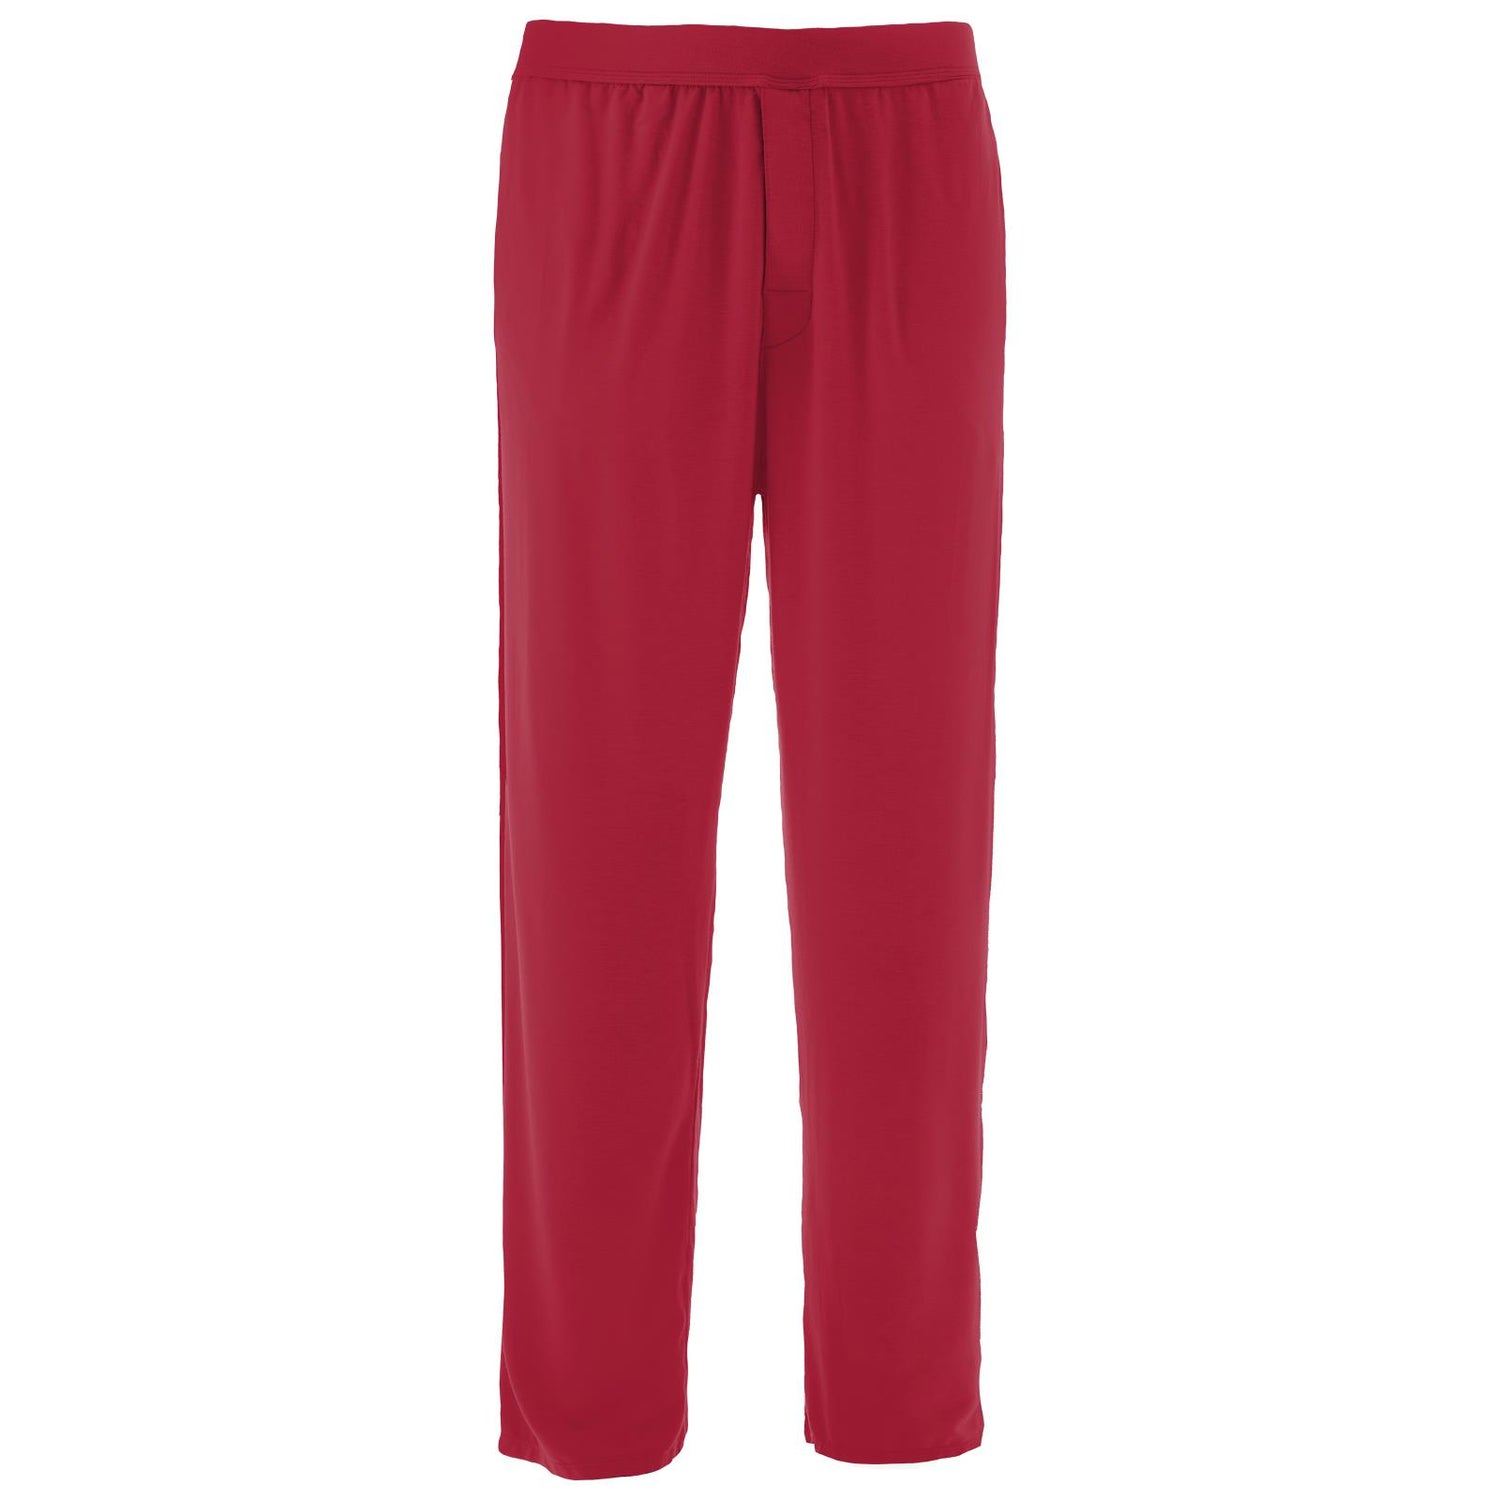 Men's Pajama Pants in Crimson